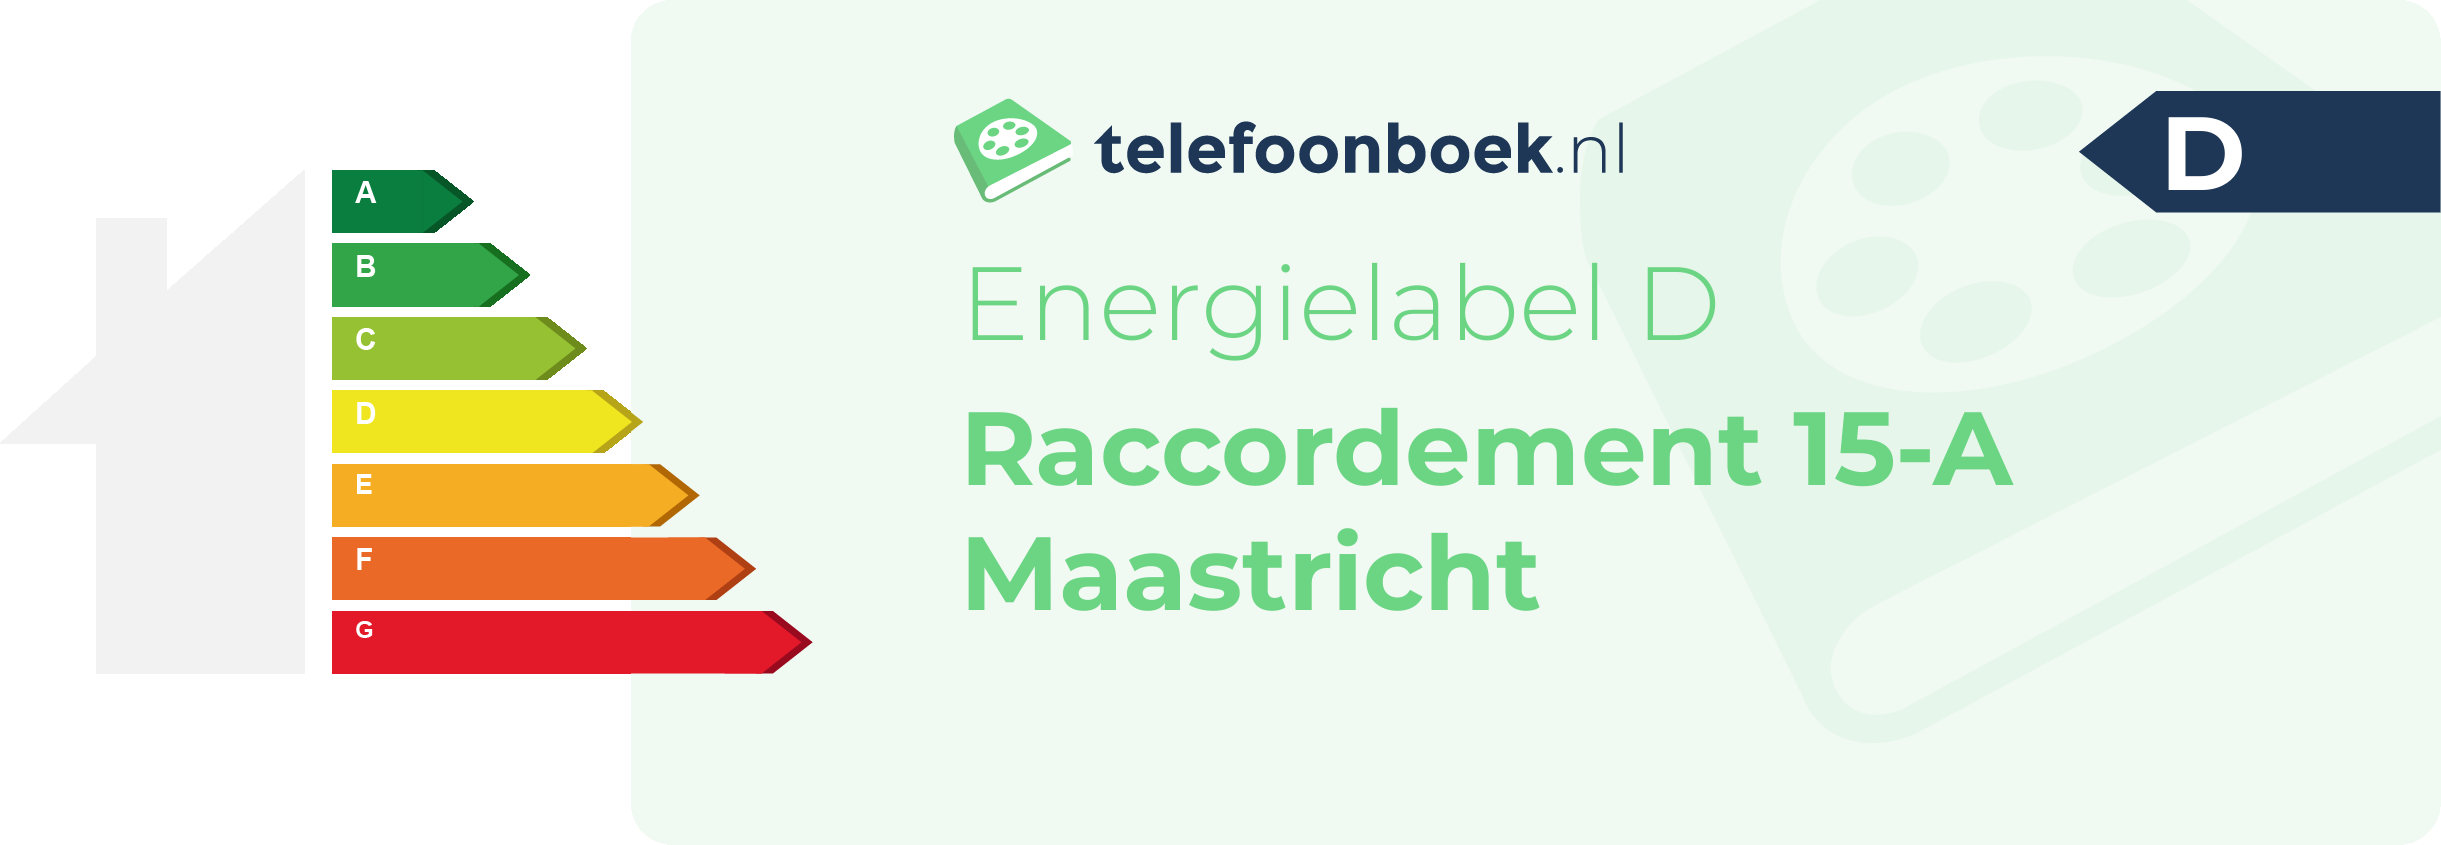 Energielabel Raccordement 15-A Maastricht